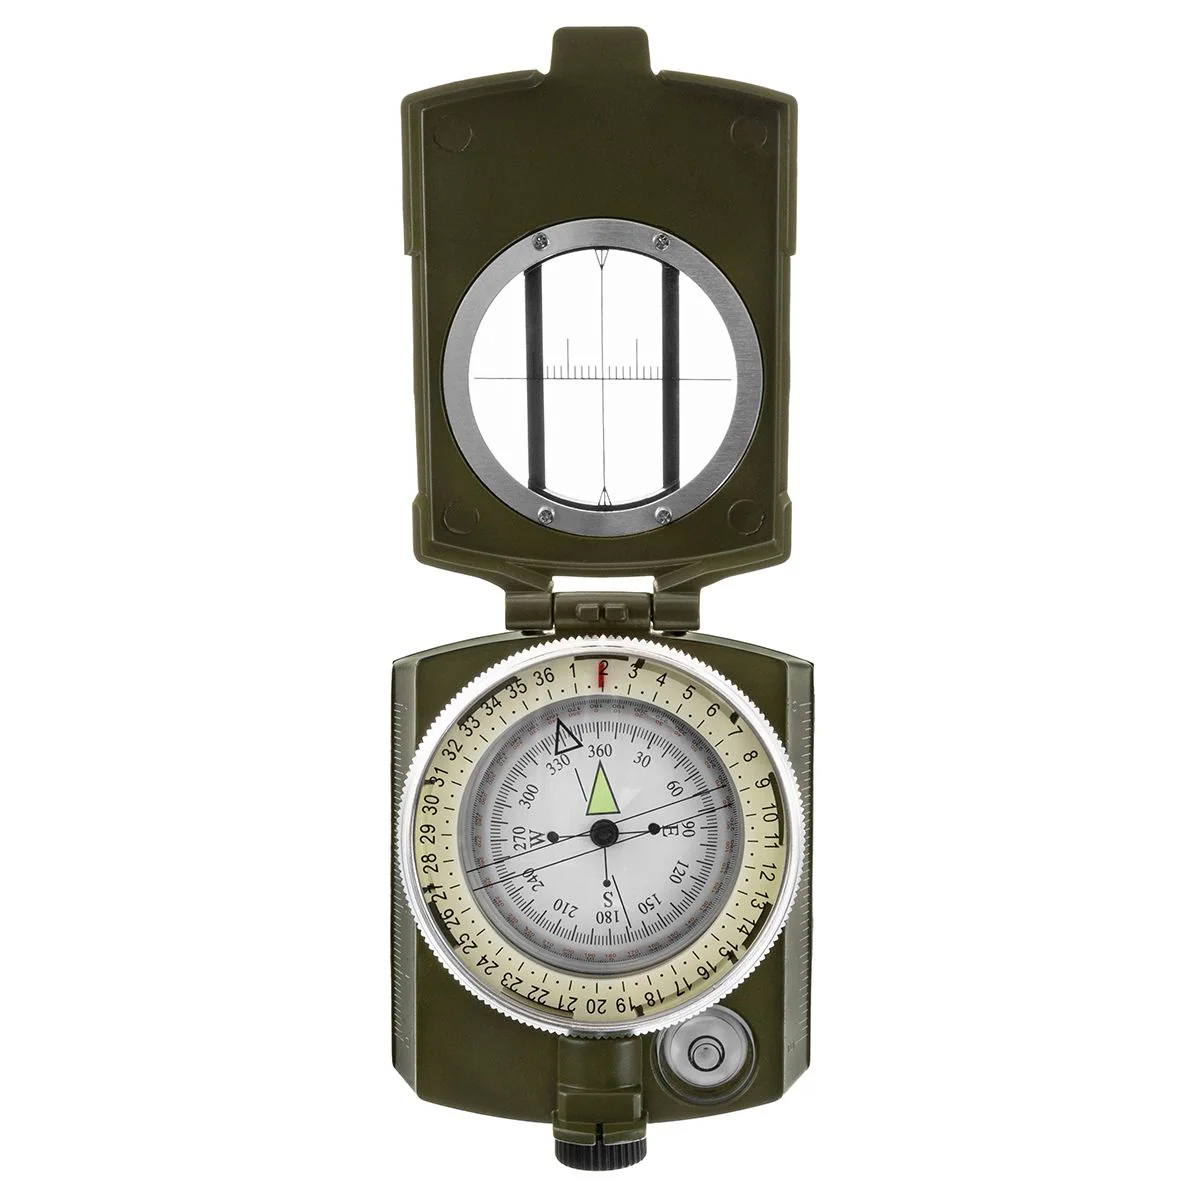 832804_kompas-badger-outdoor-prisma-military-bo-cm-prm-otwarty